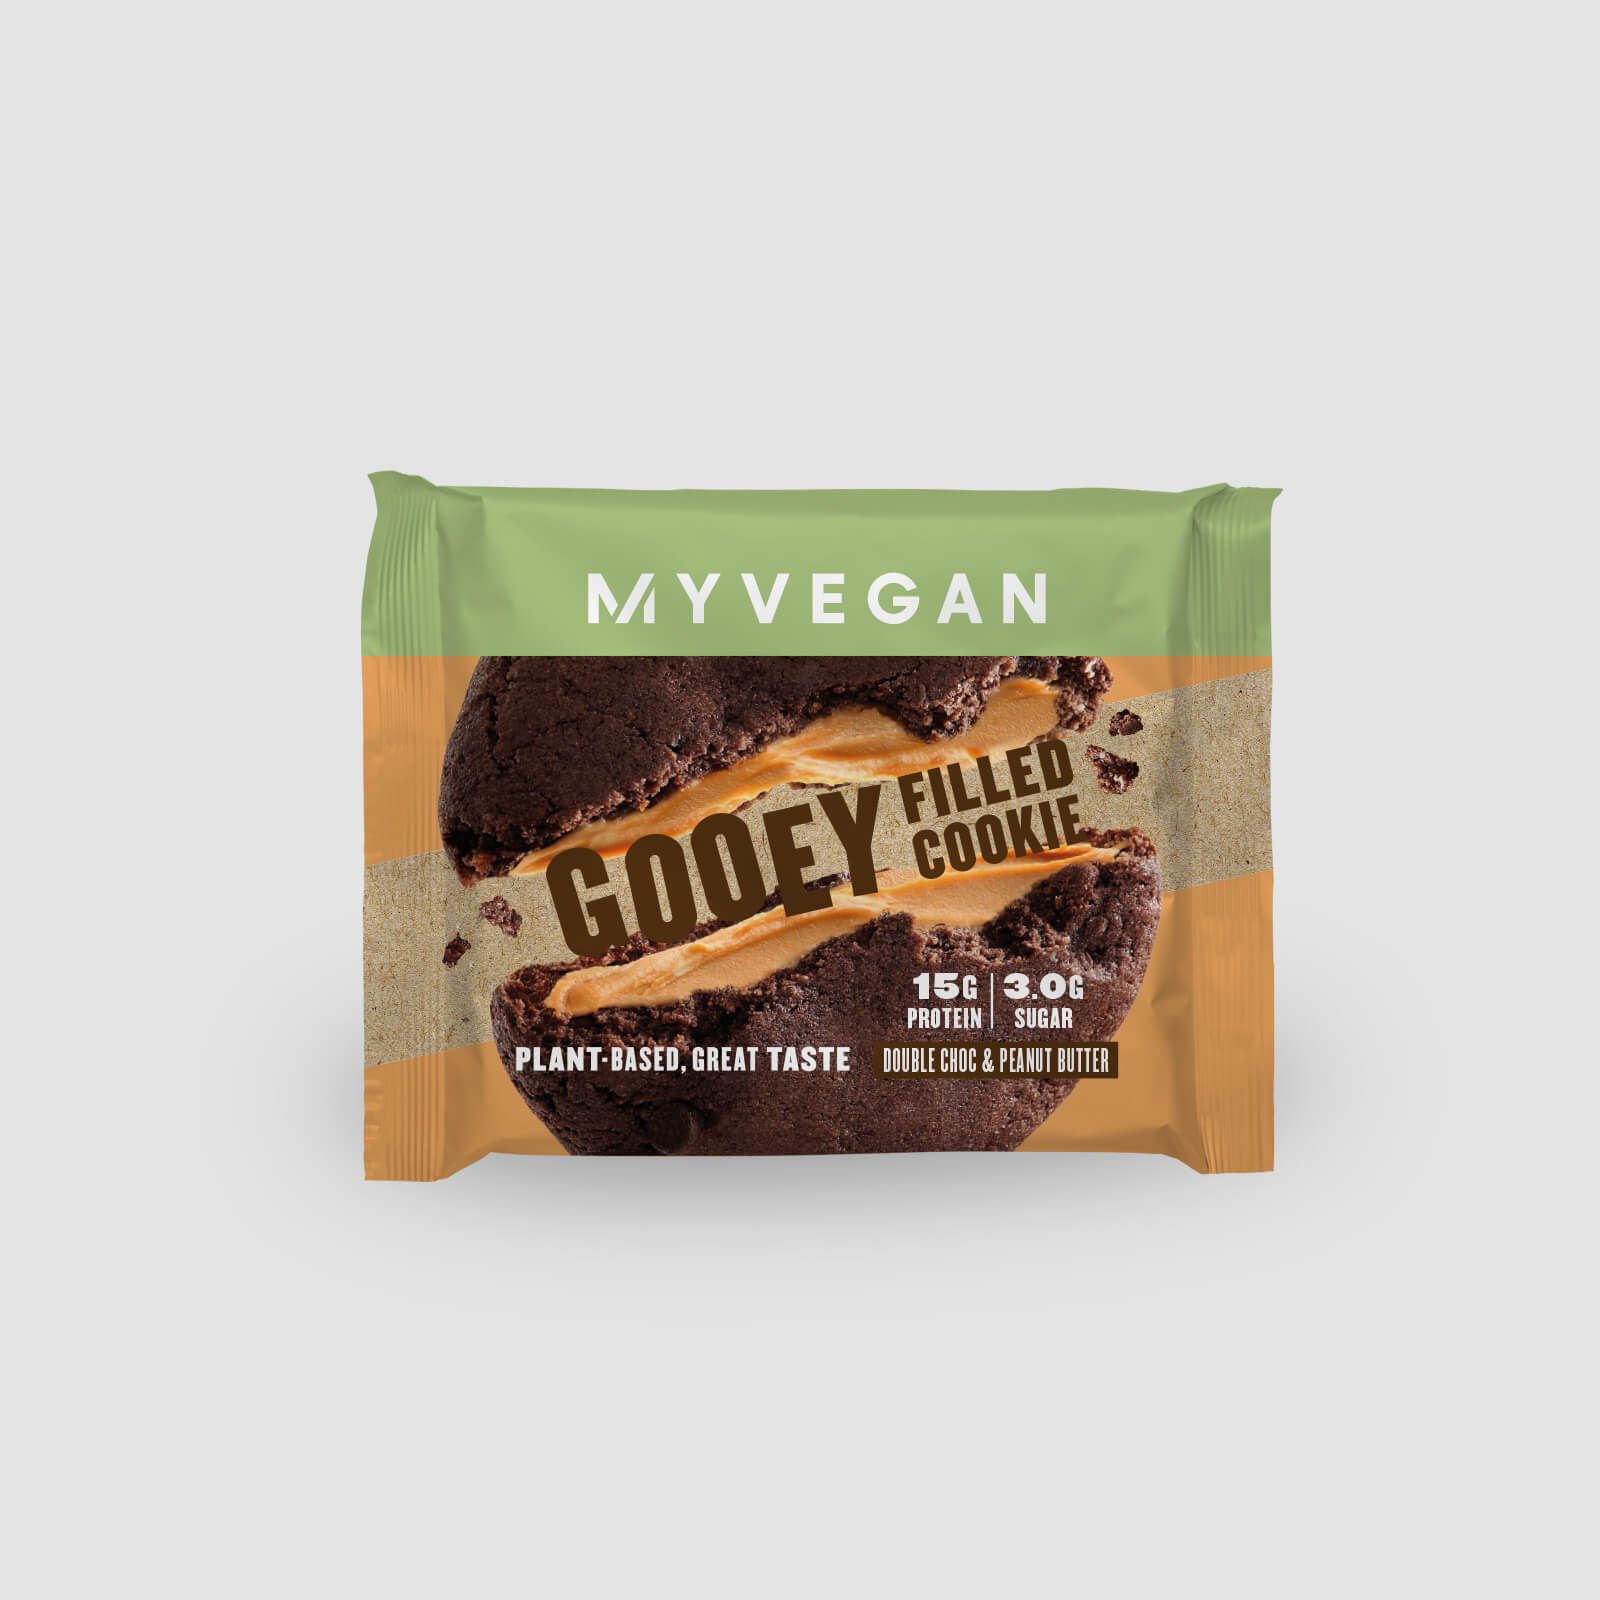 Myvegan Vegan Gooey Filled Cookie (Sample) - Double Chocolate & Peanut Butter